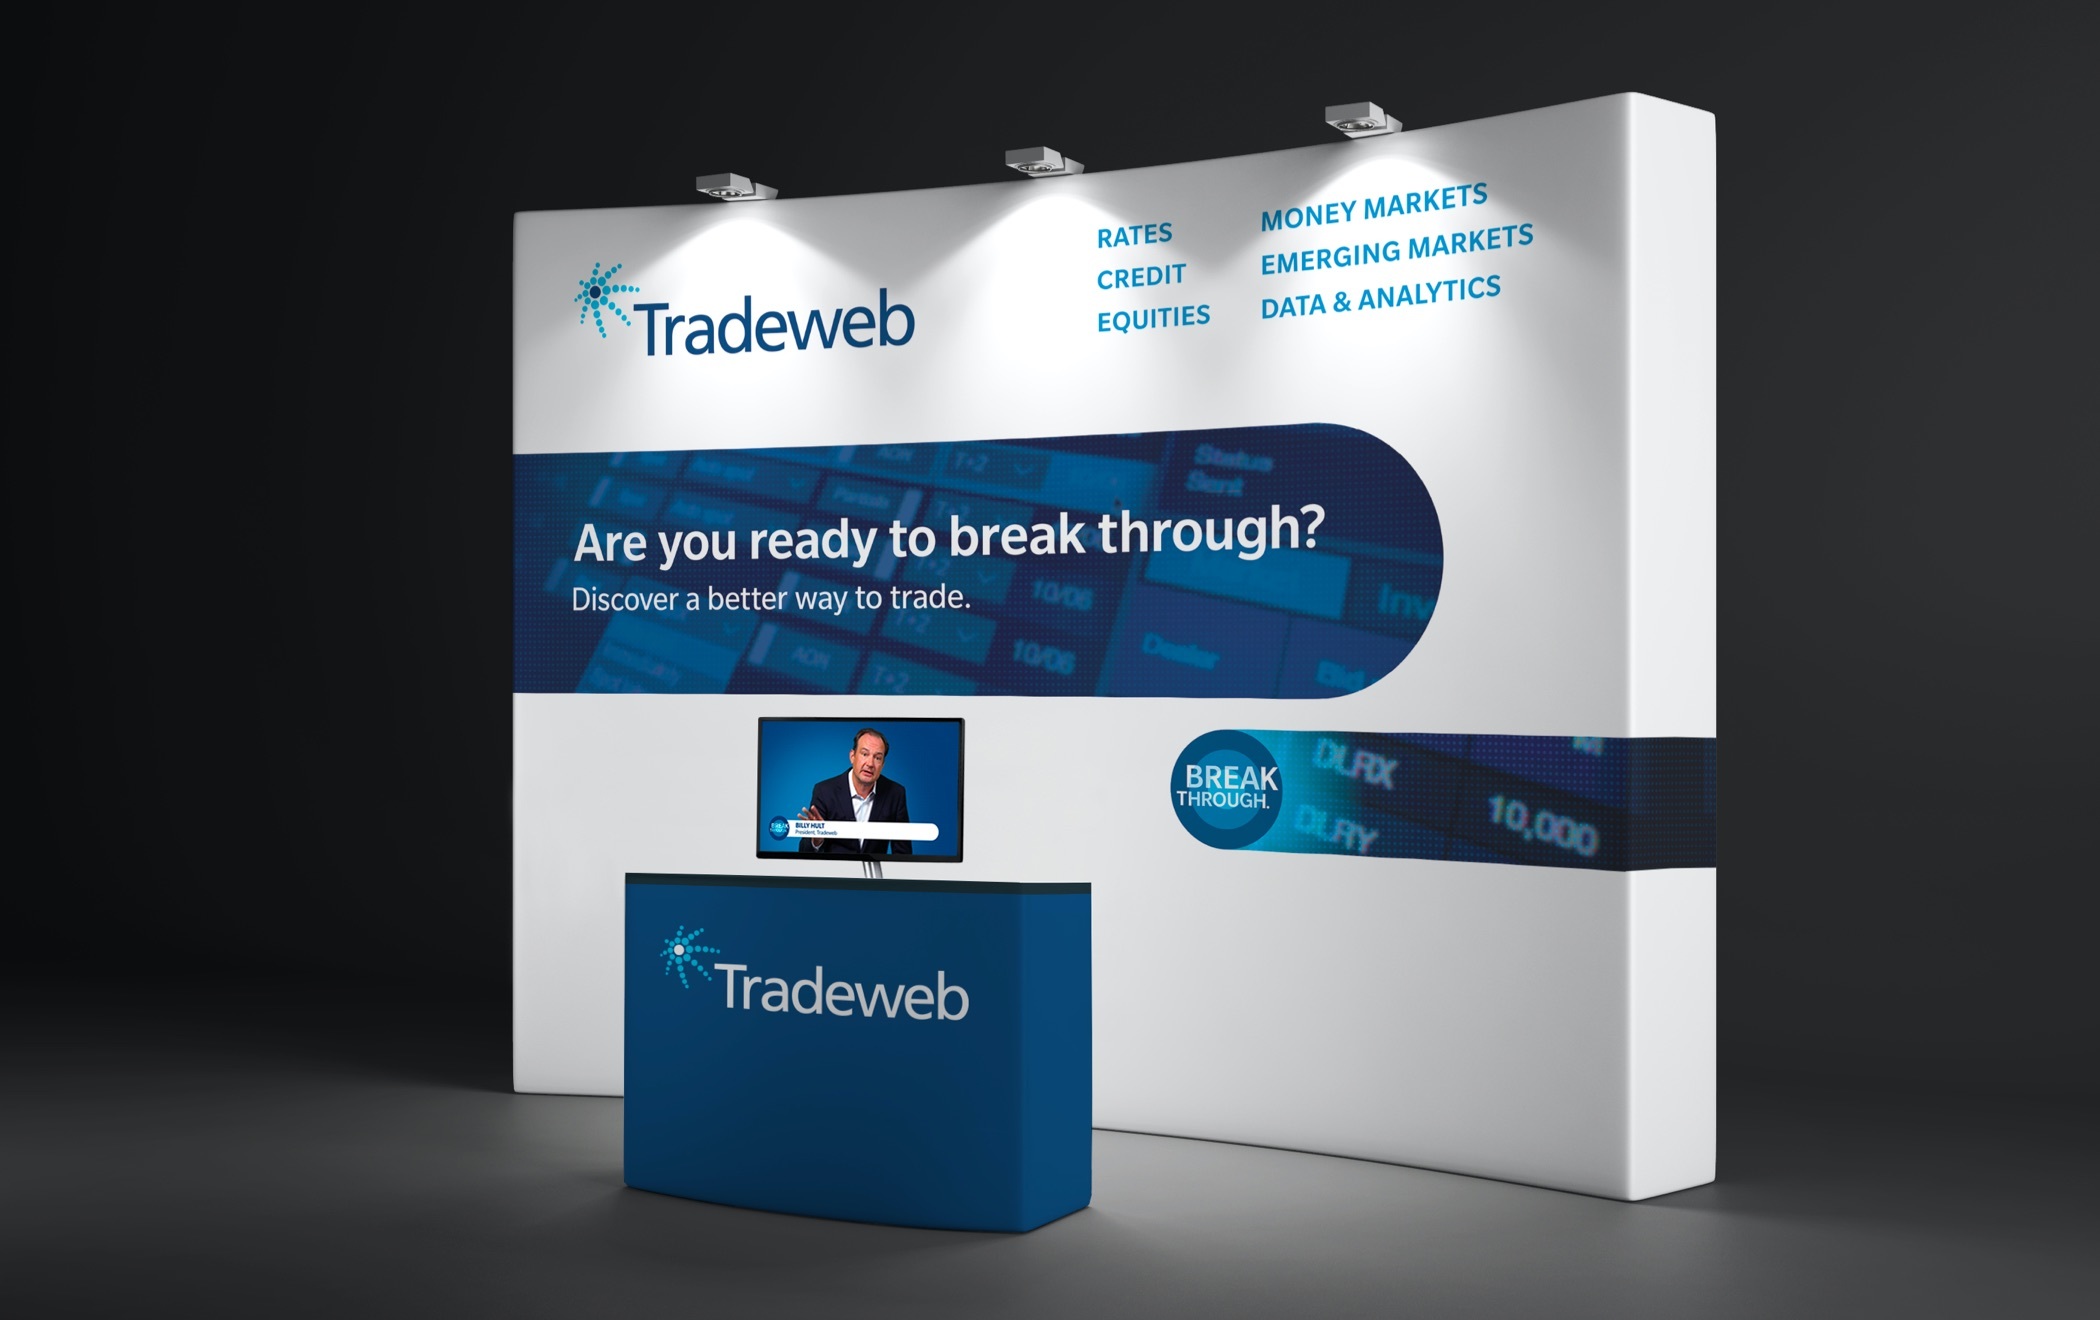 A  tradeshow booth featuring Tradeweb’s break through advertising theme. 